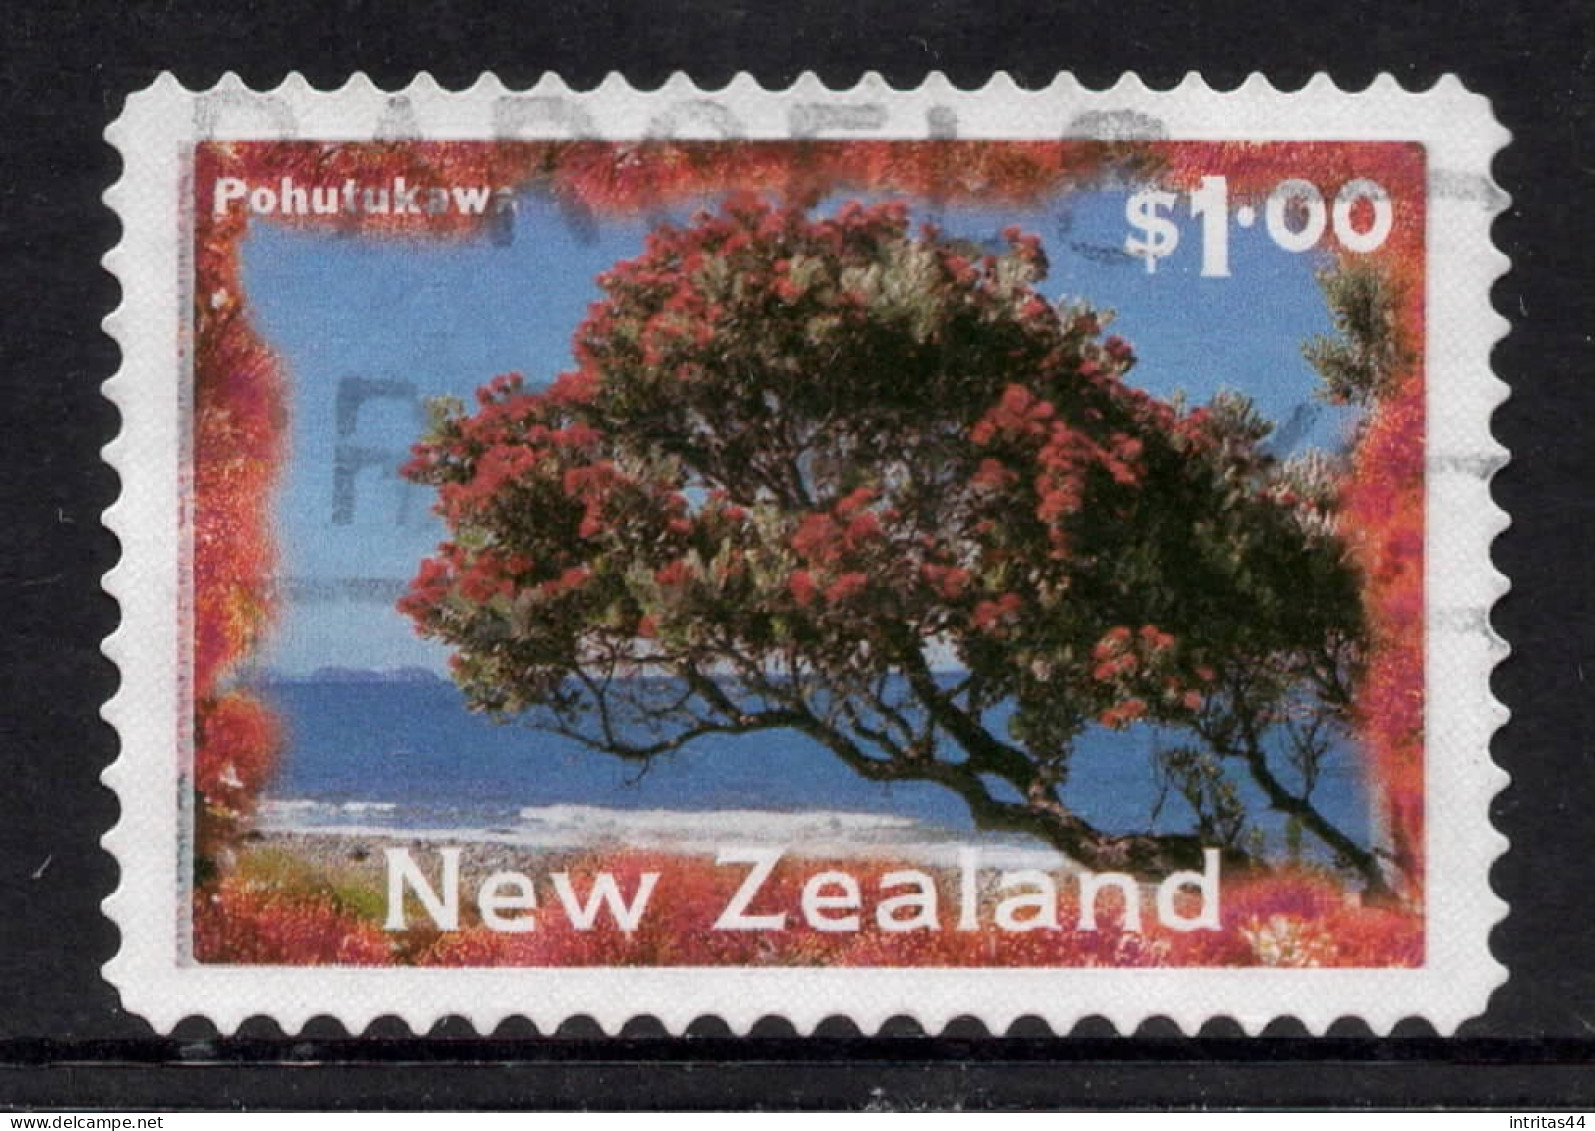 NEW ZEALAND 1996 AIRPOST  $1.00 " POHUTUKAWA " SA.  STAMP VFU - Usados